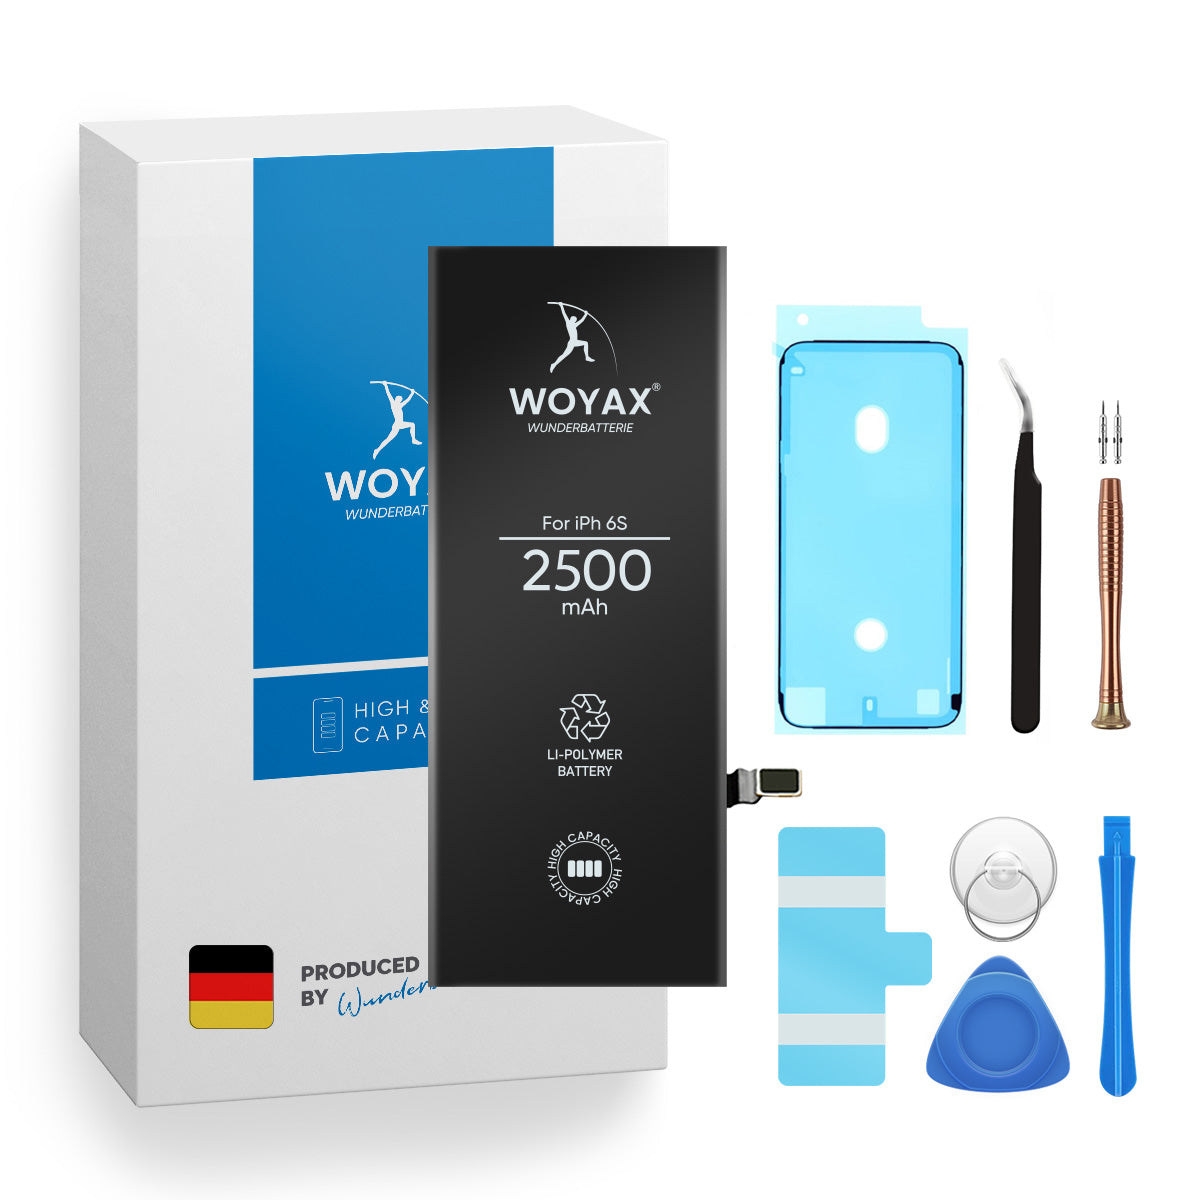 Woyax Wunderbatterie Akku für iPhone 6S 2500 mAh Hohe Kapazität Ersatzakku